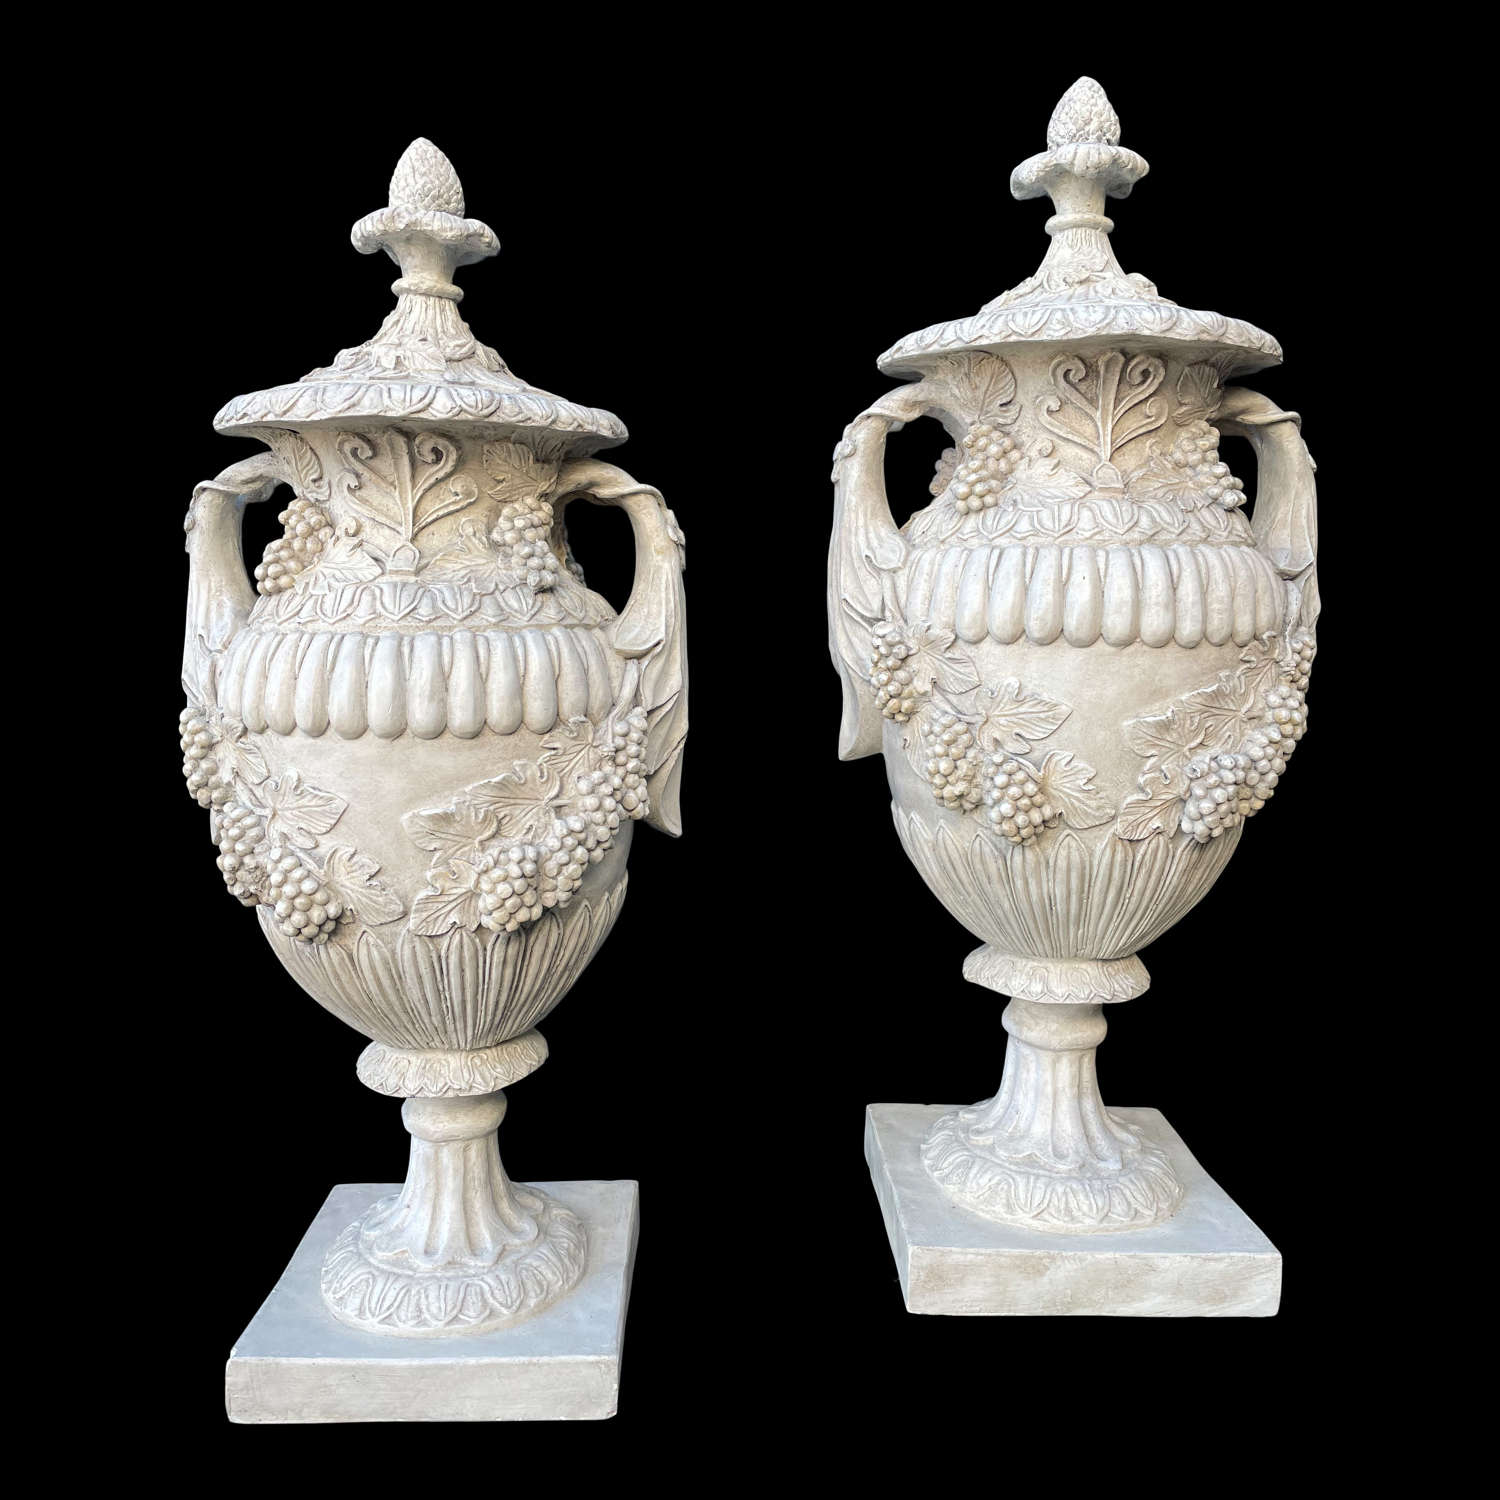 Pair of decorative Plaster Lidded Urns